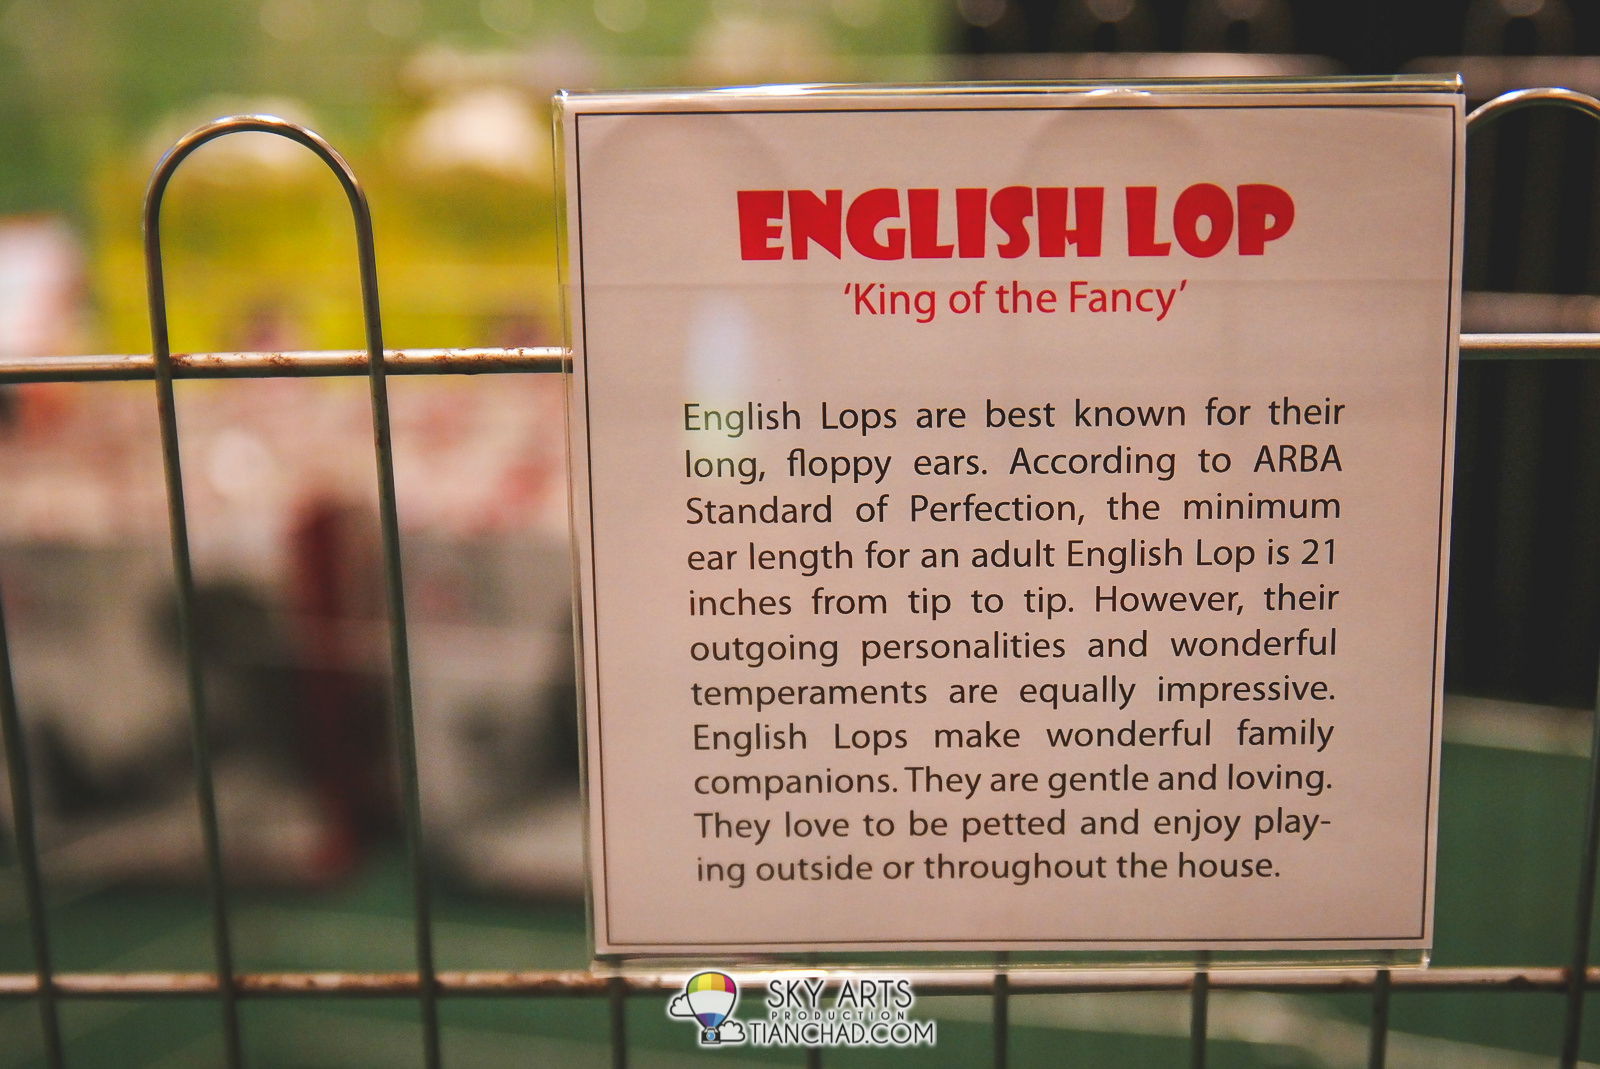 Description for English Lop